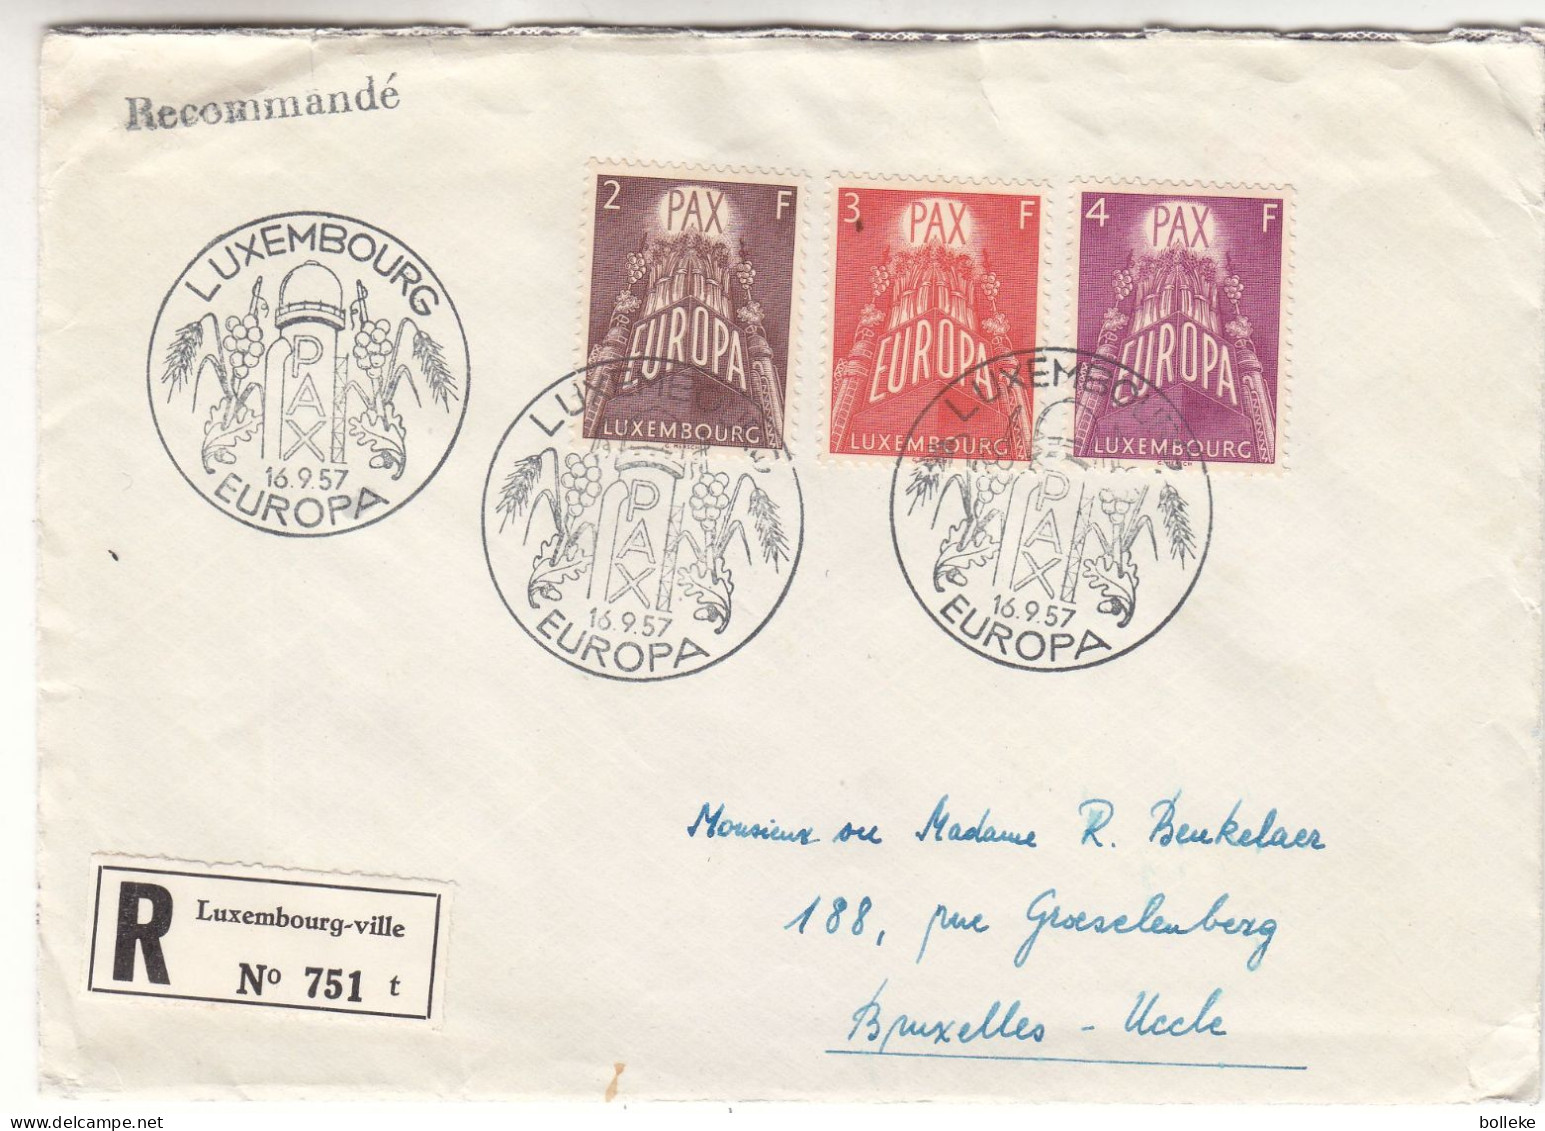 Luxembourg - Lettre FDC Recom De 1957 - Oblit Luxembourg - Europa 57 -  Valeur 75 Euros - Briefe U. Dokumente